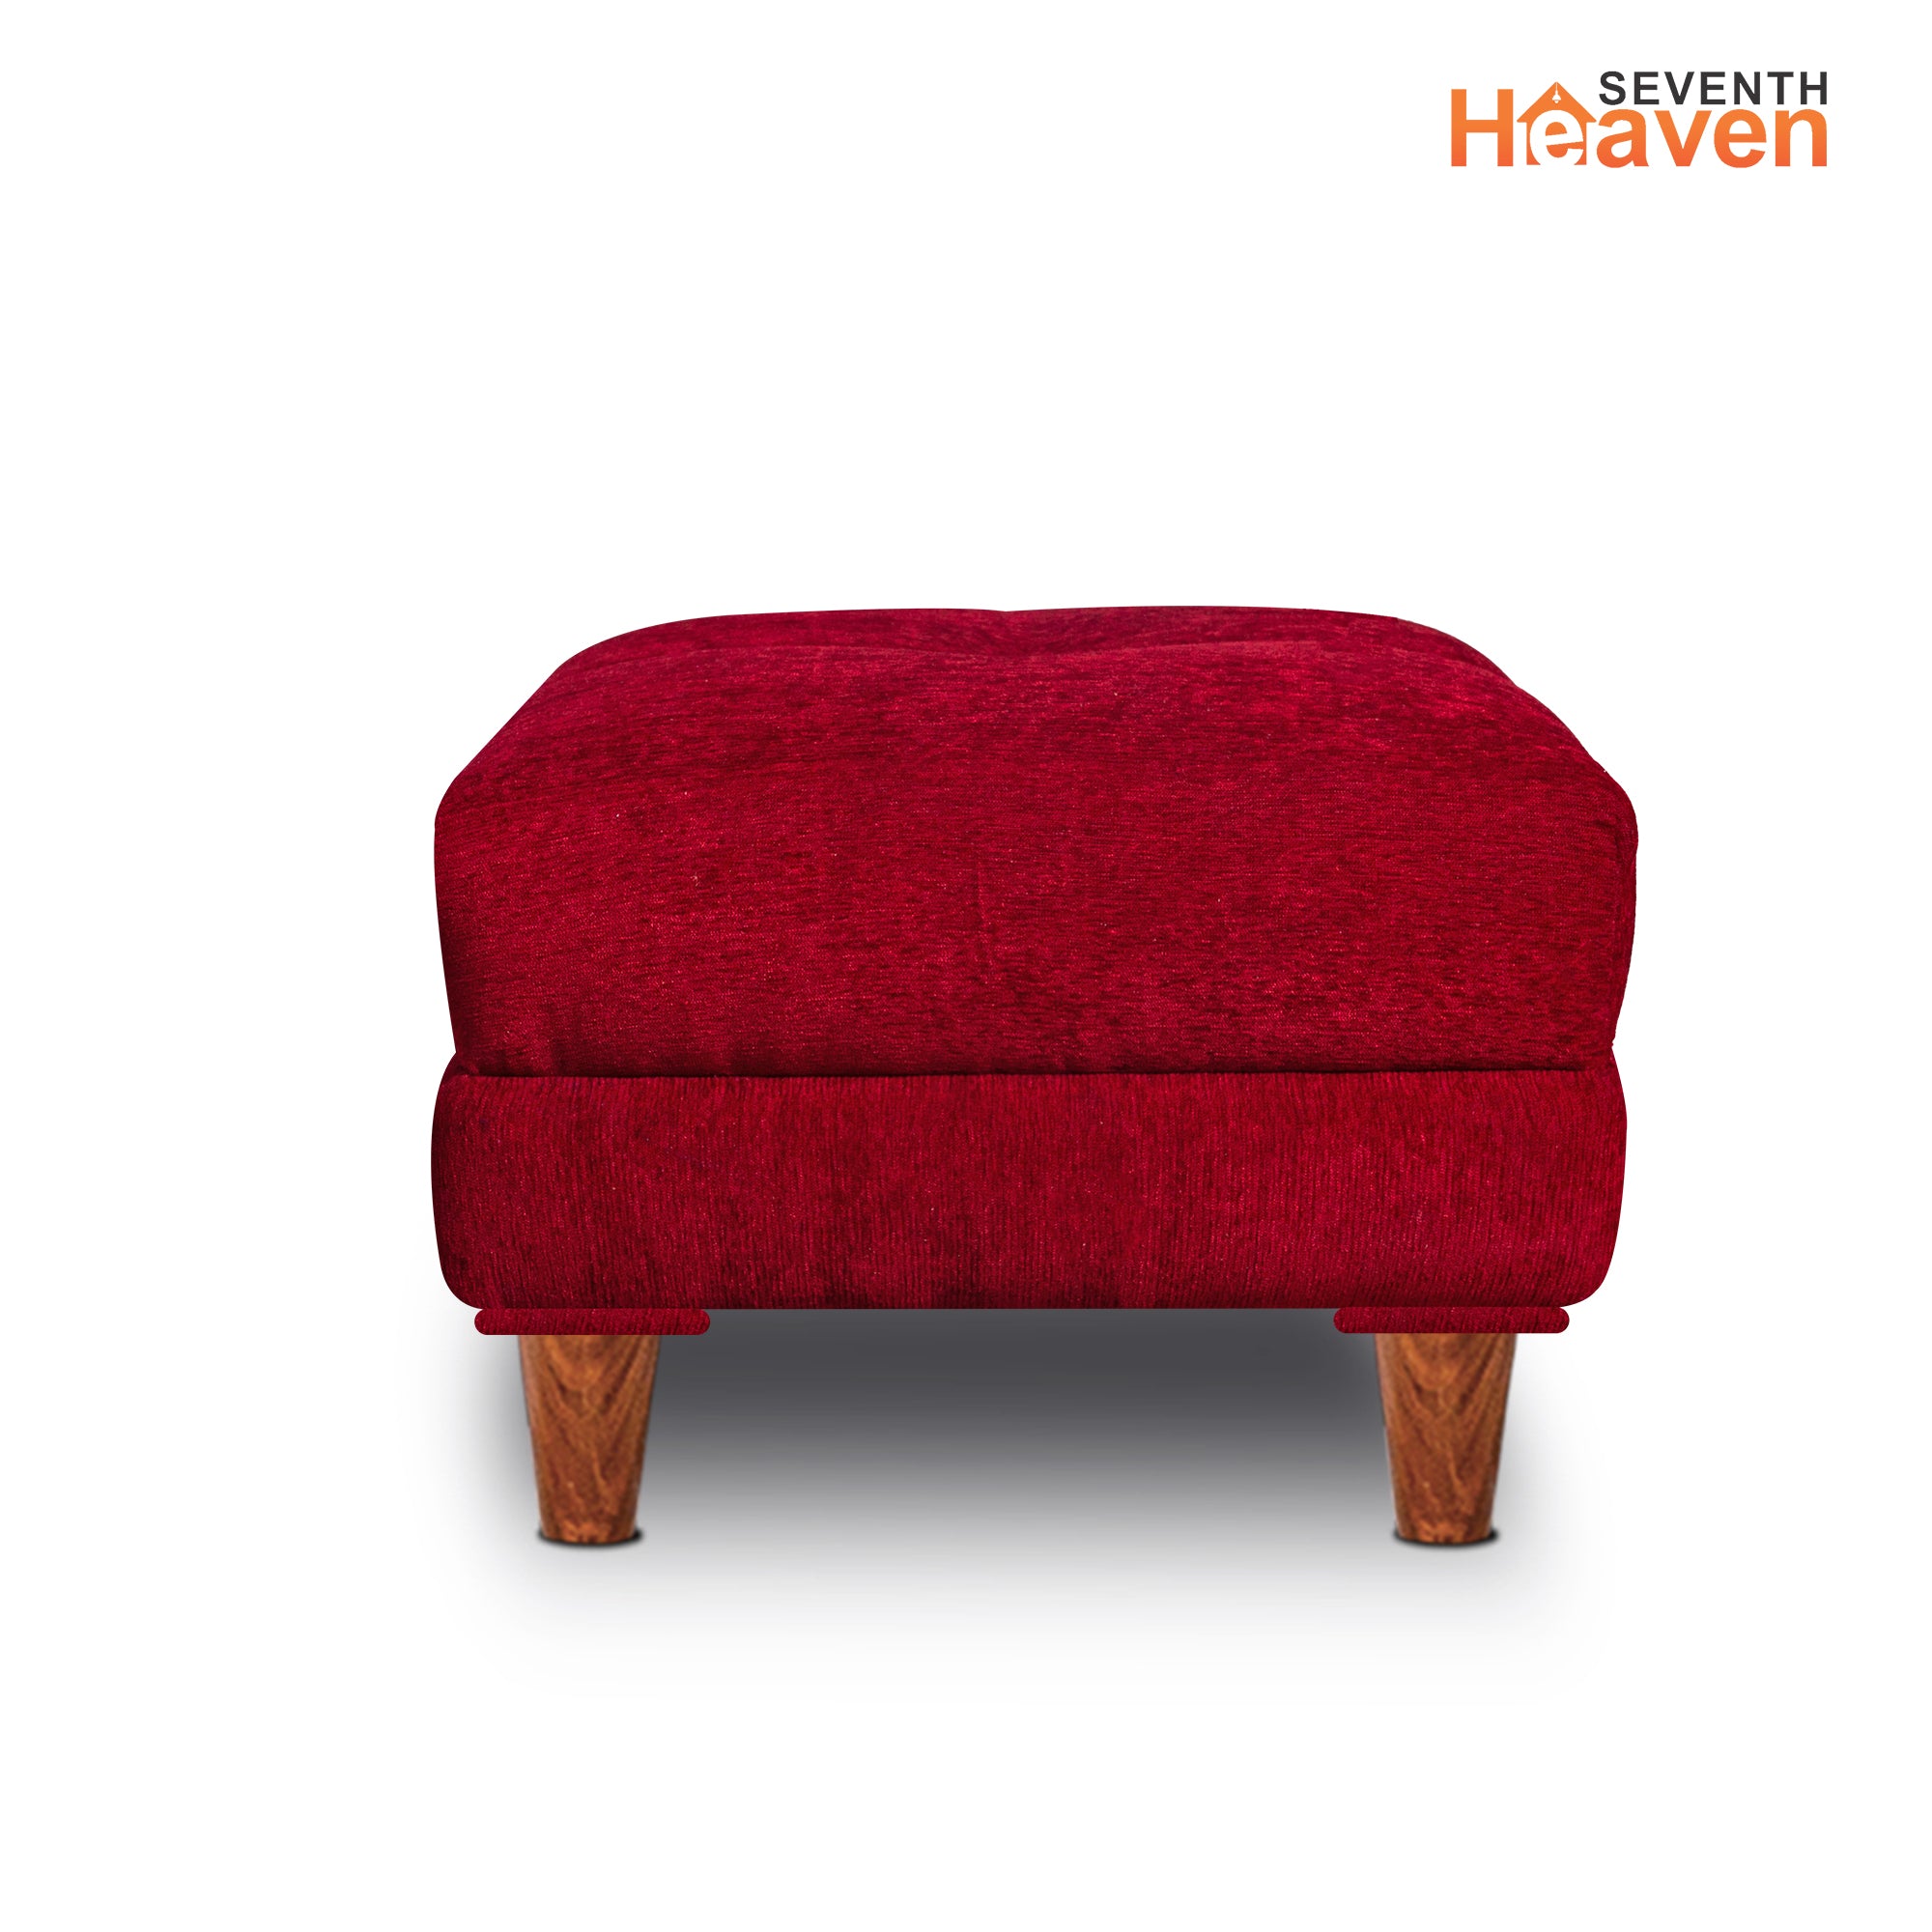 Seventh Heaven Milan 4 Seater Sofa with Ottoman, Chenille Molfino Fabric: 3 Year Warranty Fabric 4 Seater Sofa  (Finish Color - Maroon, DIY(Do-It-Yourself))